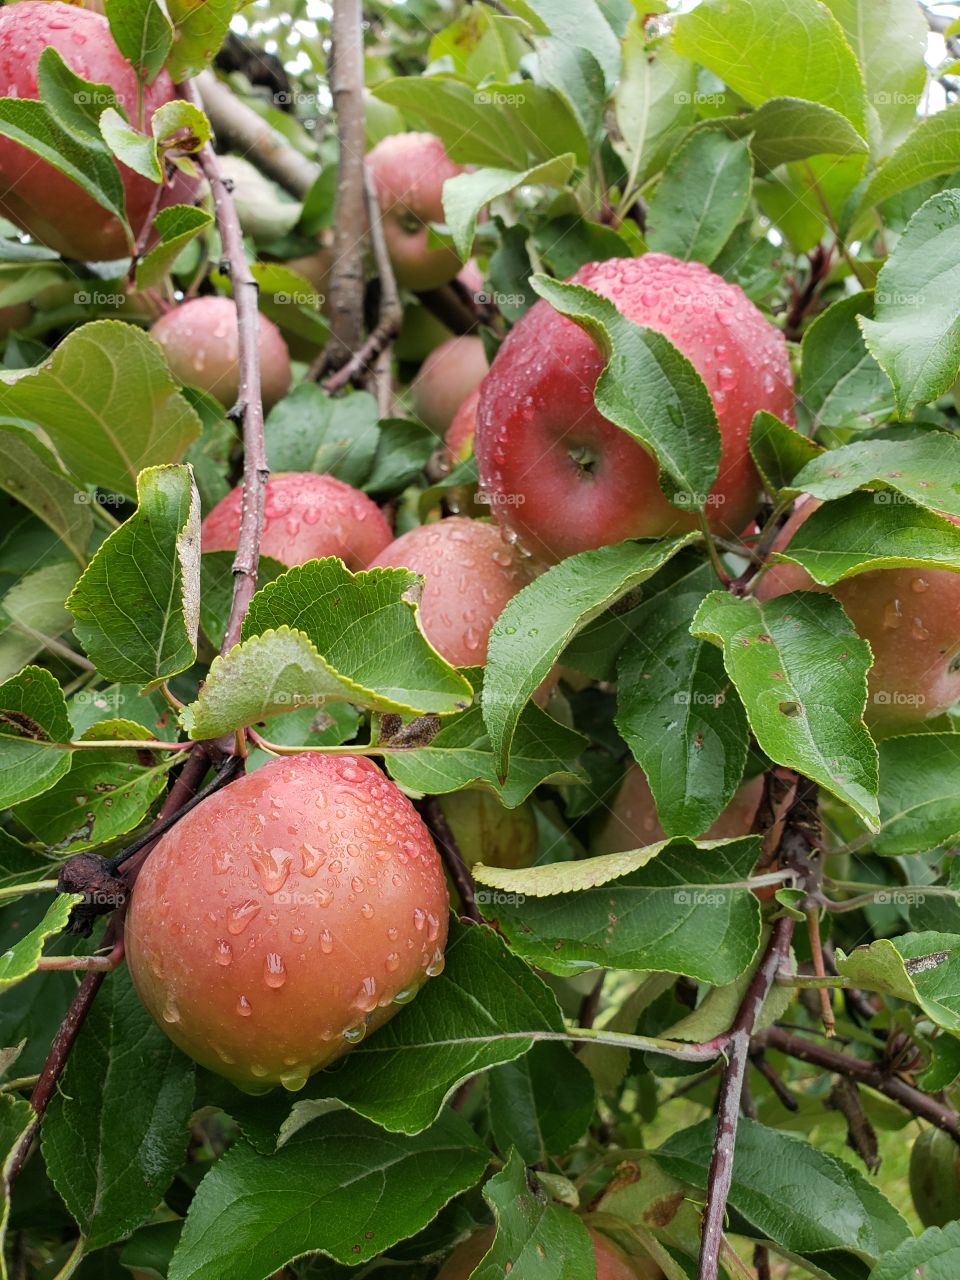 Fresh raindrops on red apples hanging on apple tree